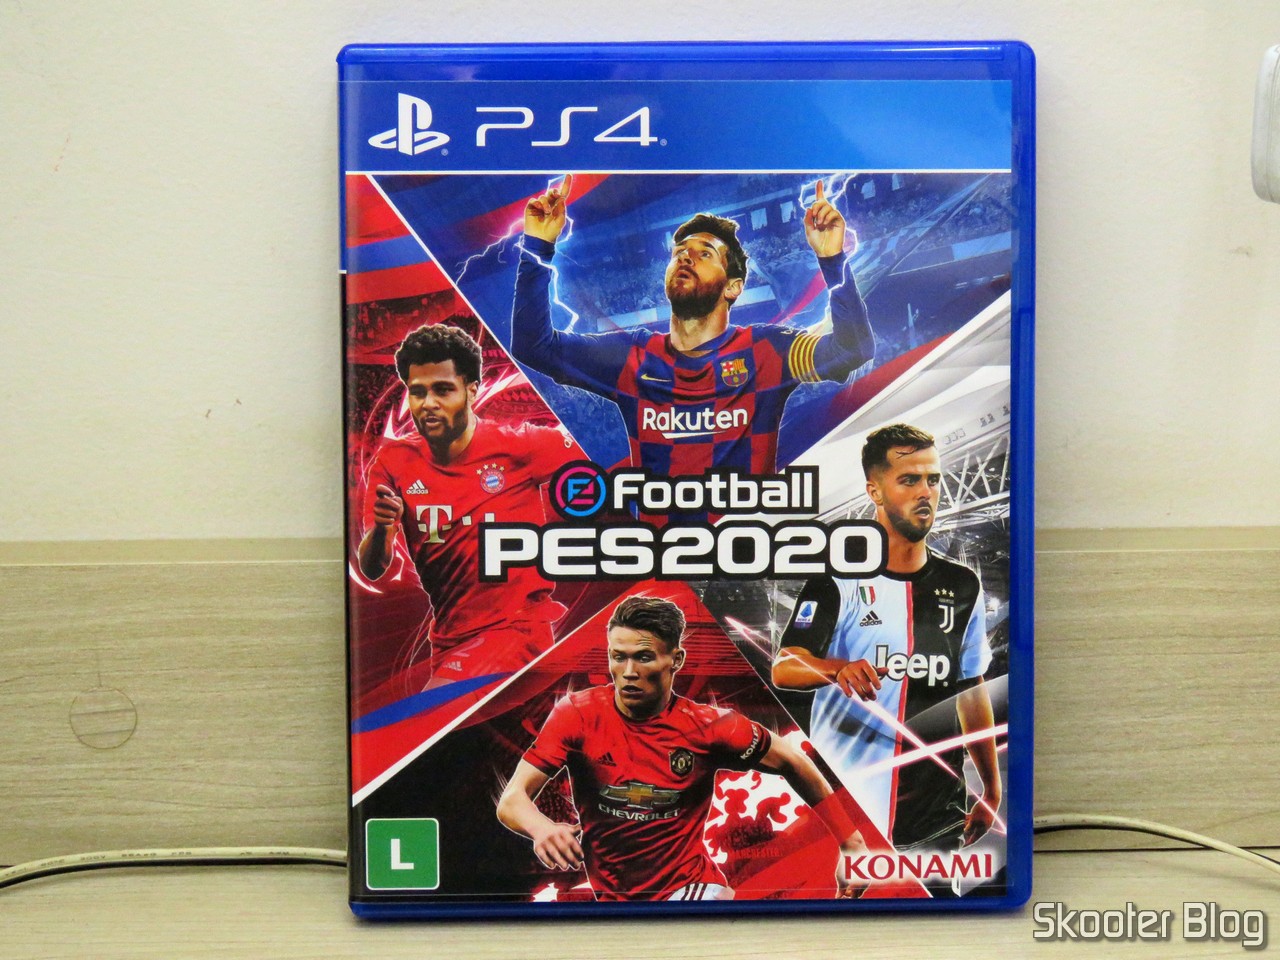 PES 2018 PT-BR Pro Evolution Soccer 18 FUTEBOL Jogos Ps3 PSN